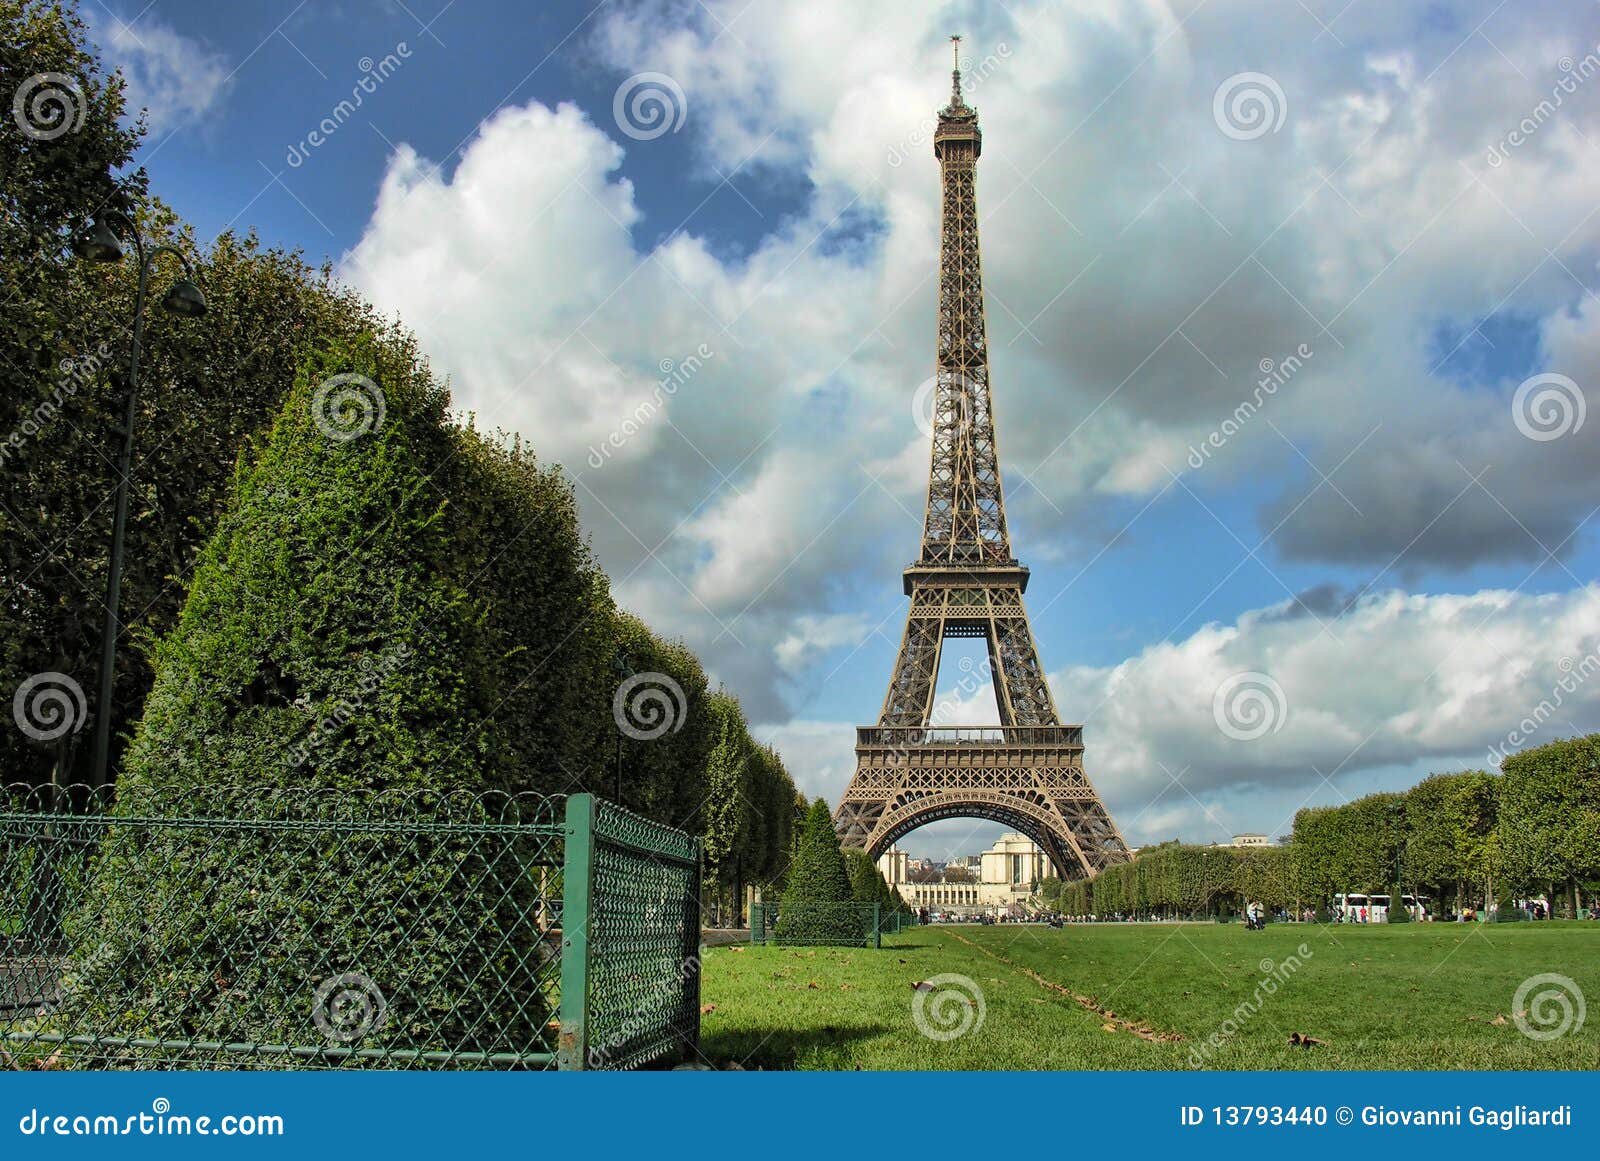 Paris in October stock photo. Image of restaurant, business - 13793440